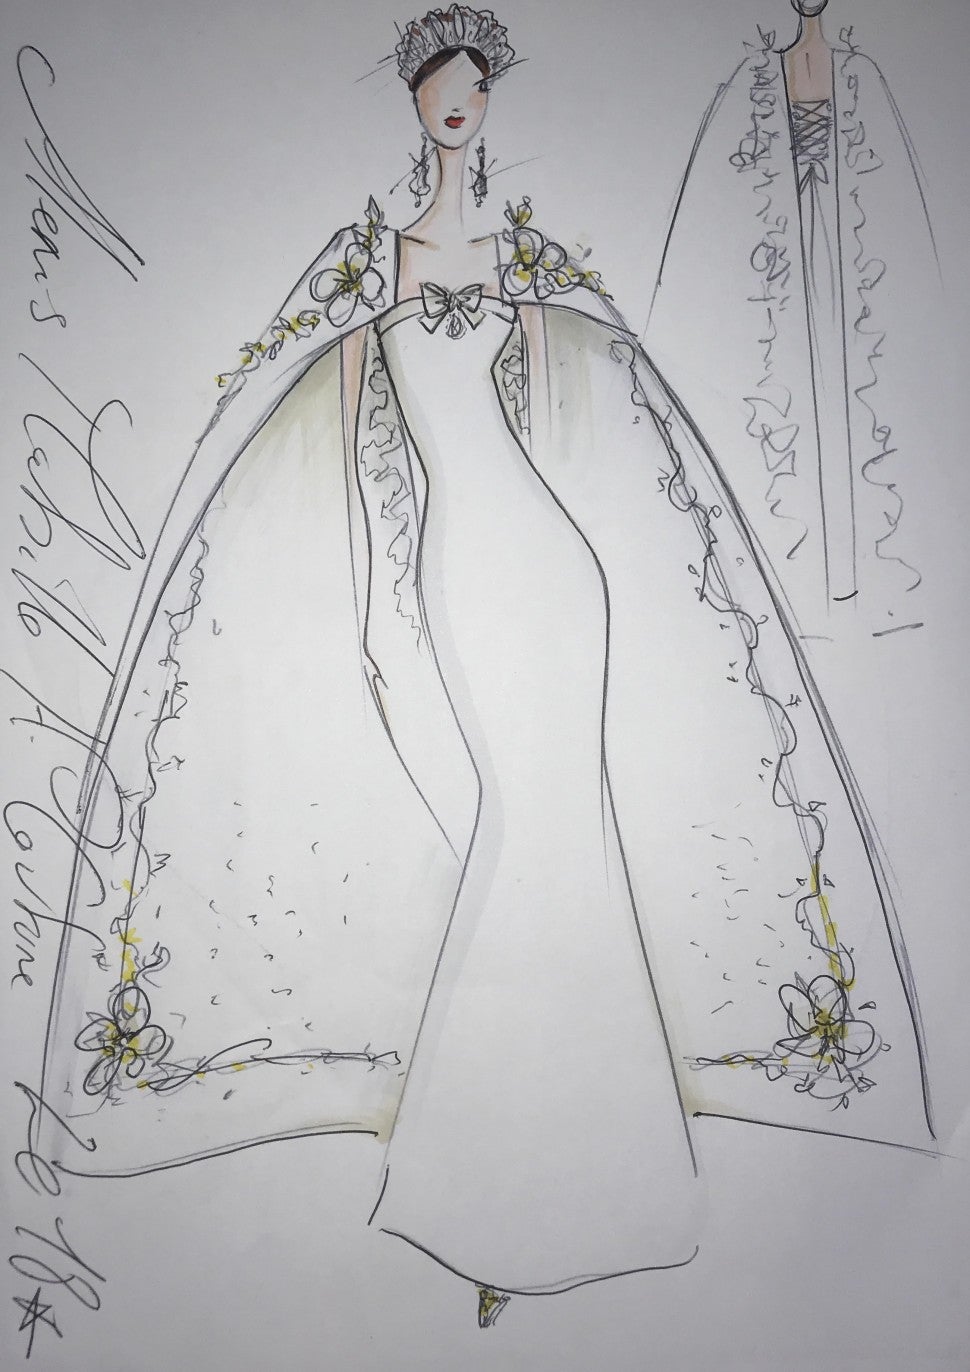 Alexis Mabille's potential Meghan Markle wedding dress sketch.